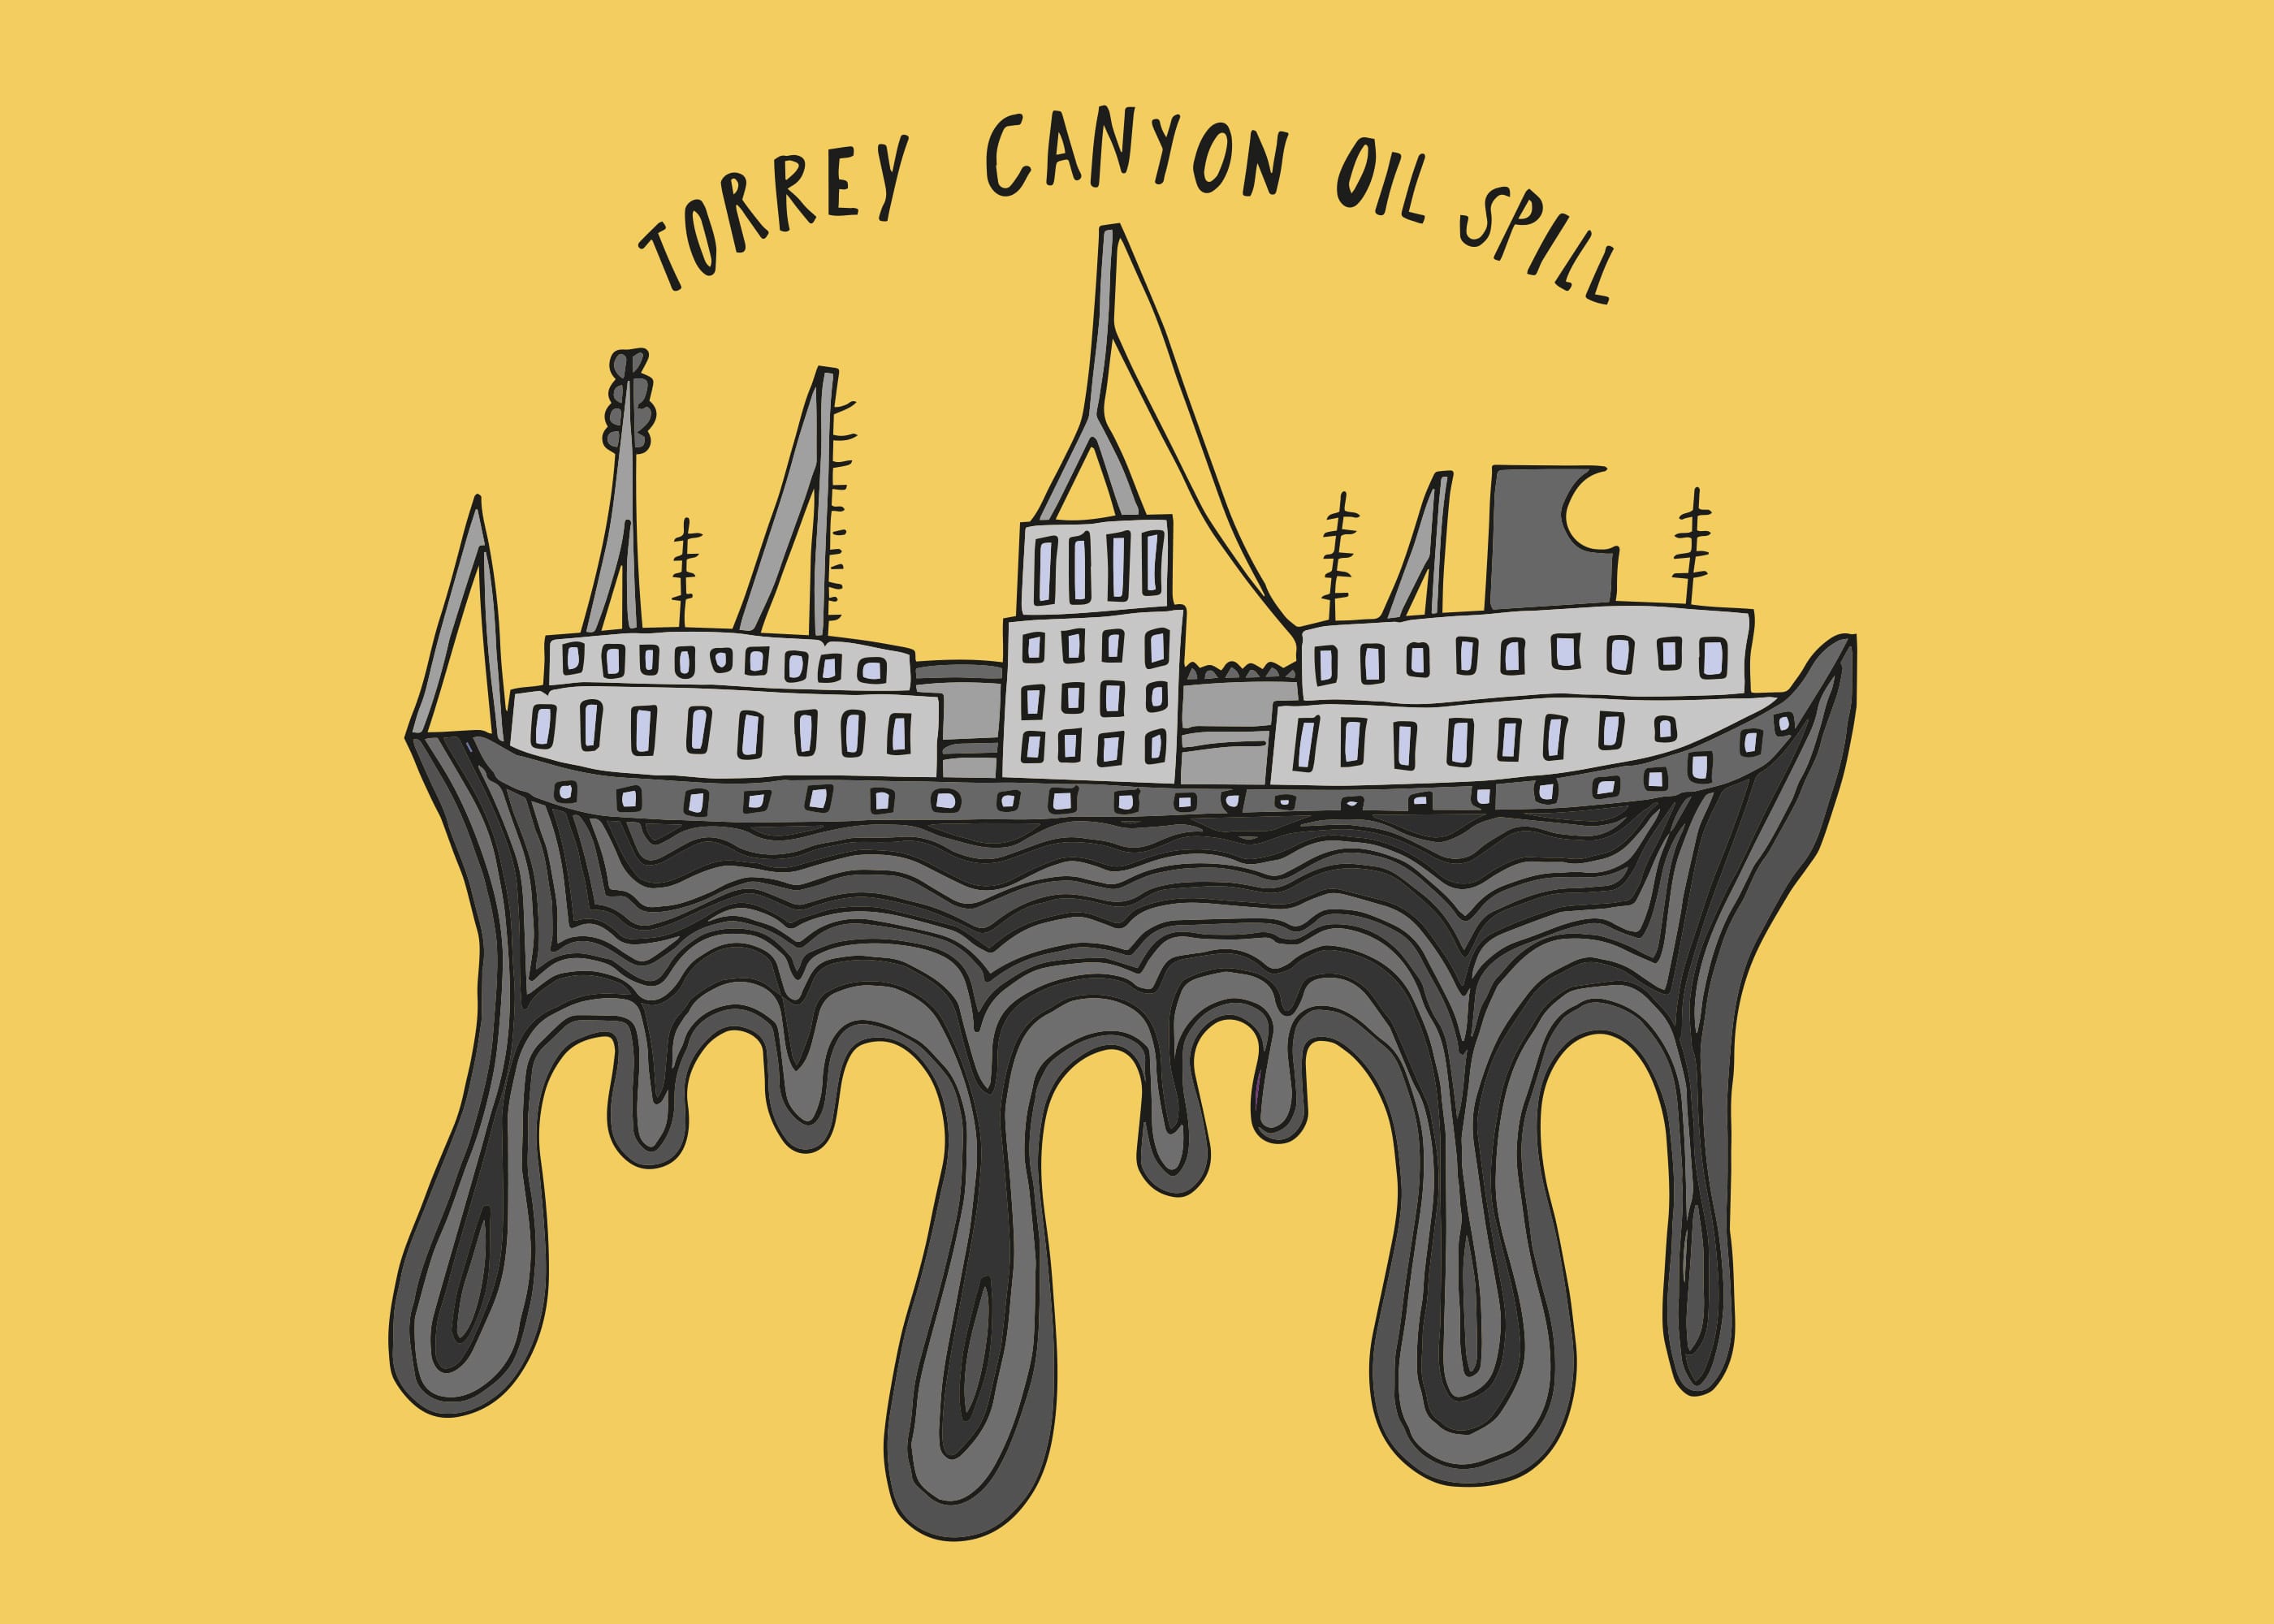 torrey-canyon-oil-spill-illustration